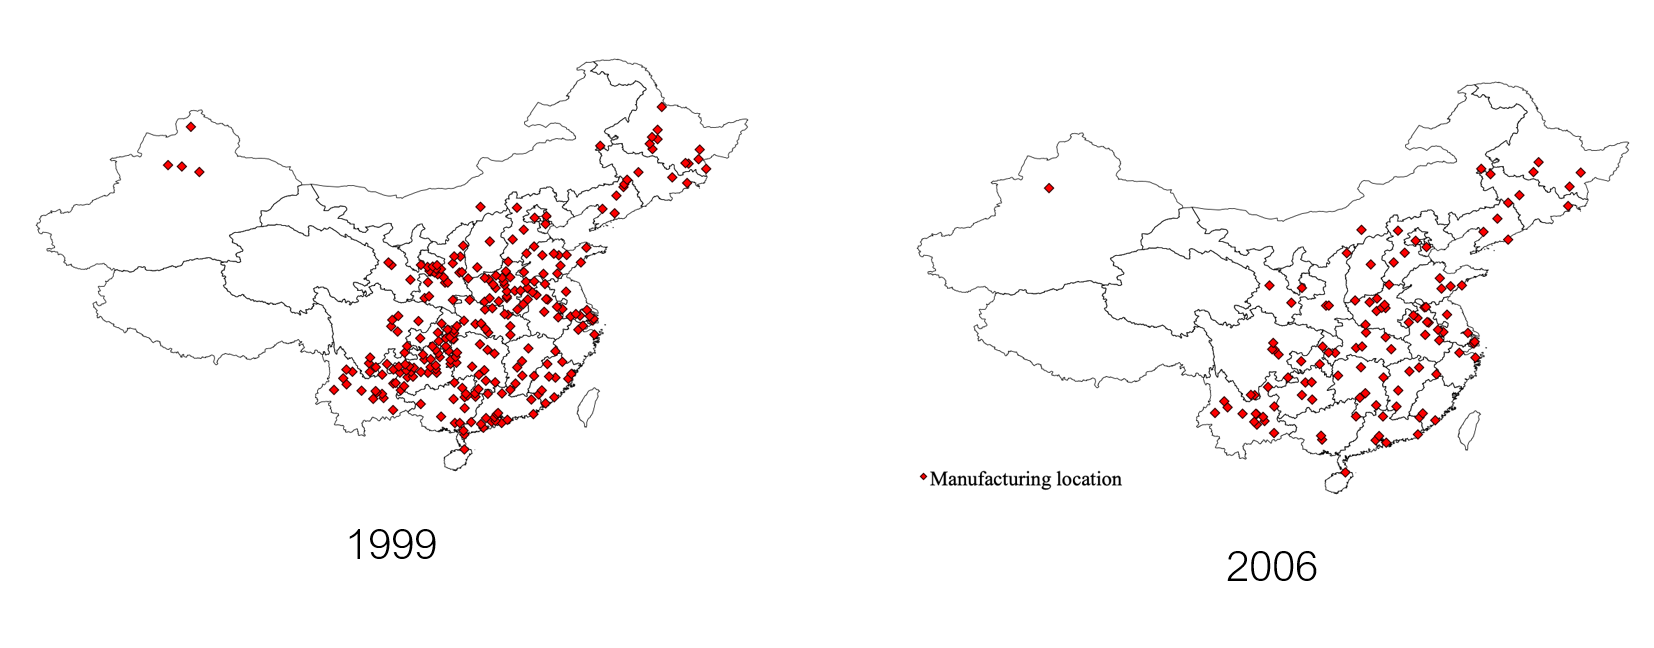 Cigarette plant locations in China